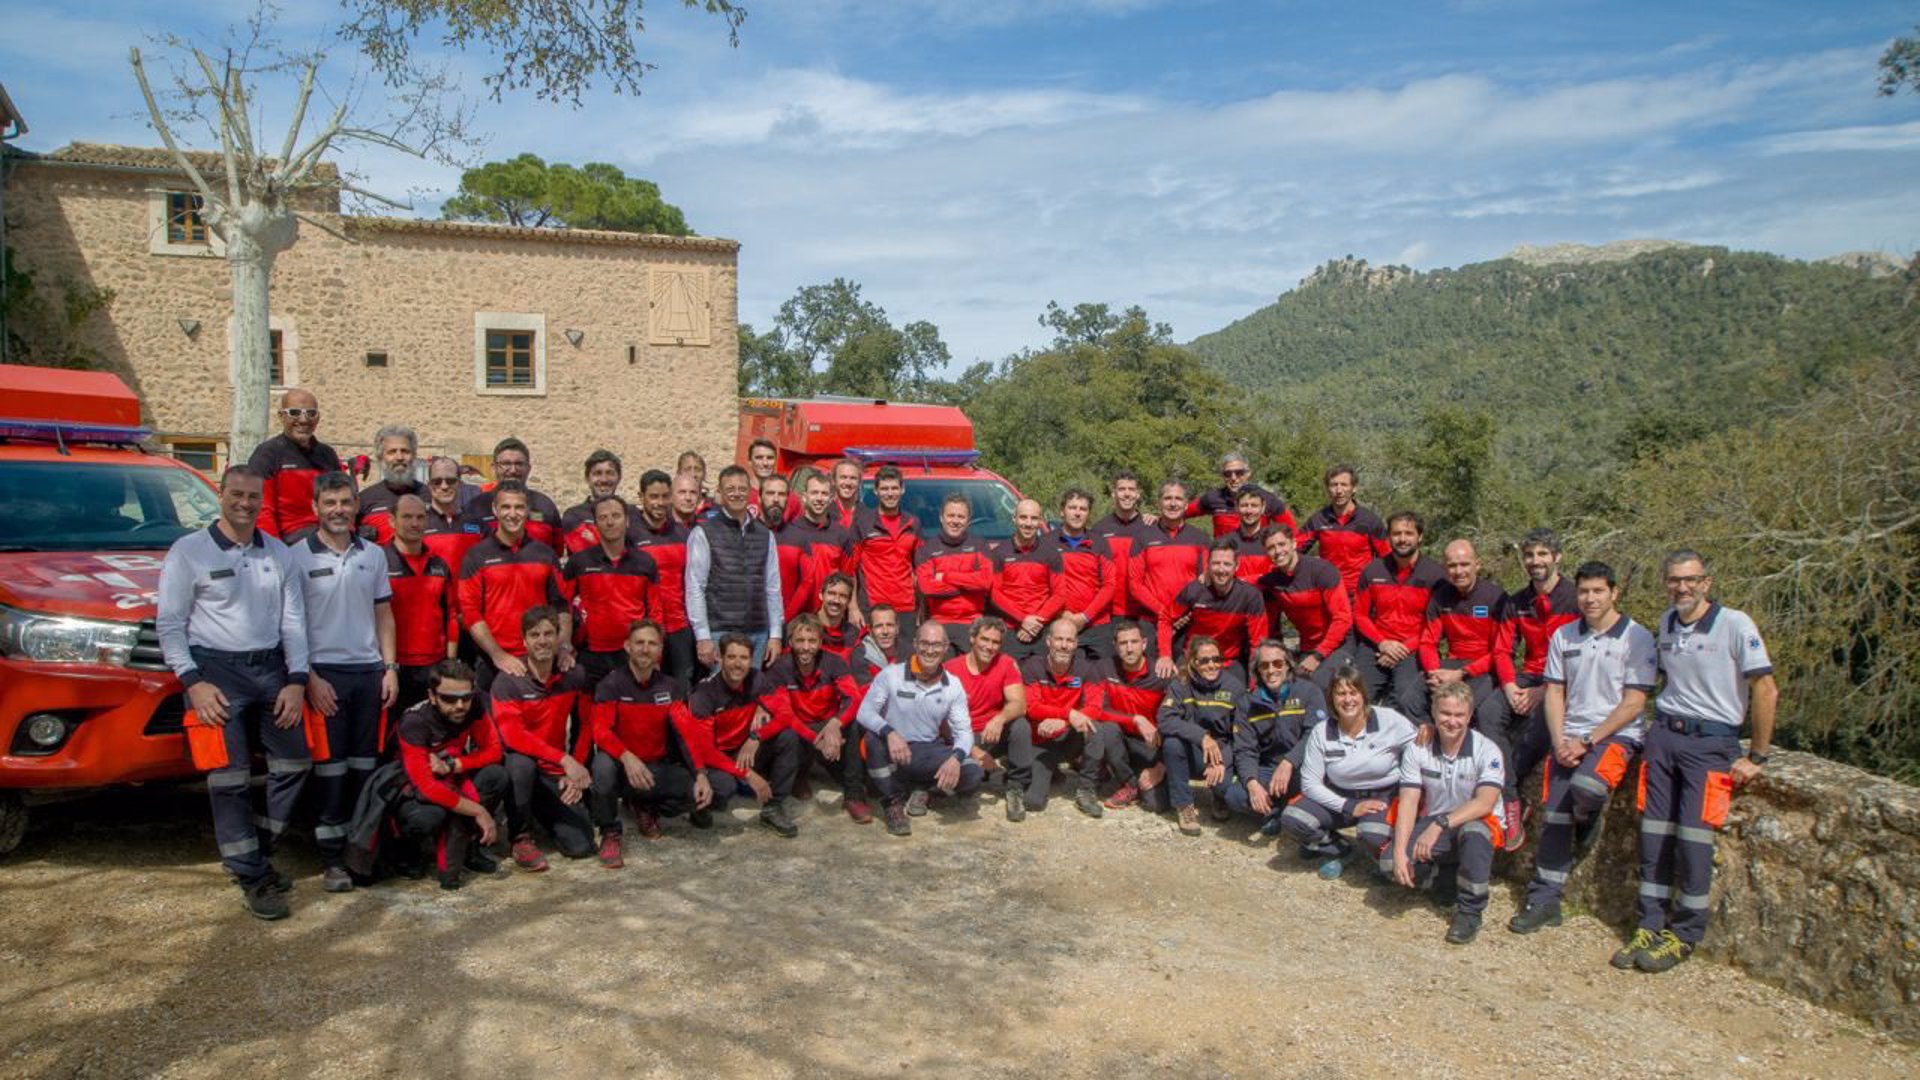 Bomberos de Mallorca que han participado en la jornada de formación en el Santuario de Lluc. - CONSELL DE MALLORCA